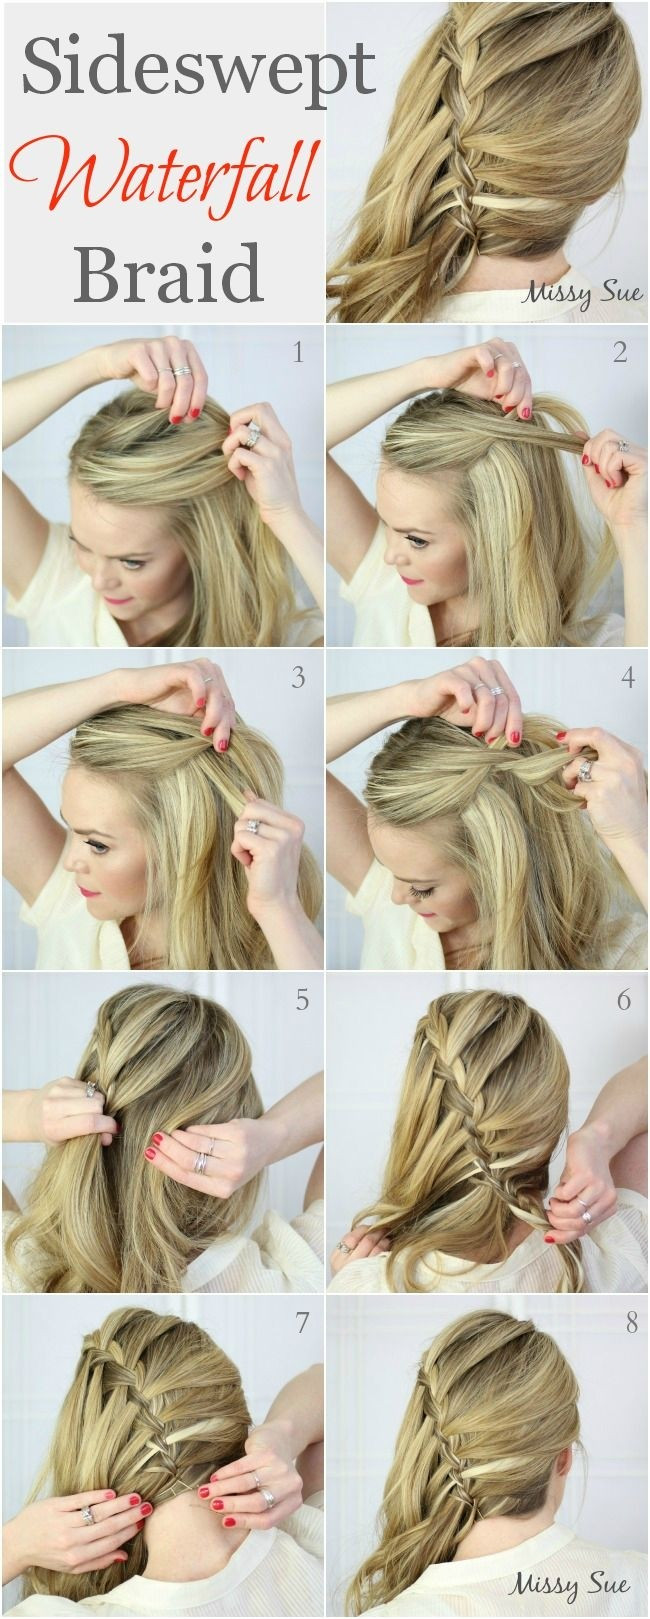 Waterfall Braid Hairstyle
 10 Best Waterfall Braids Hairstyle Ideas for Long Hair